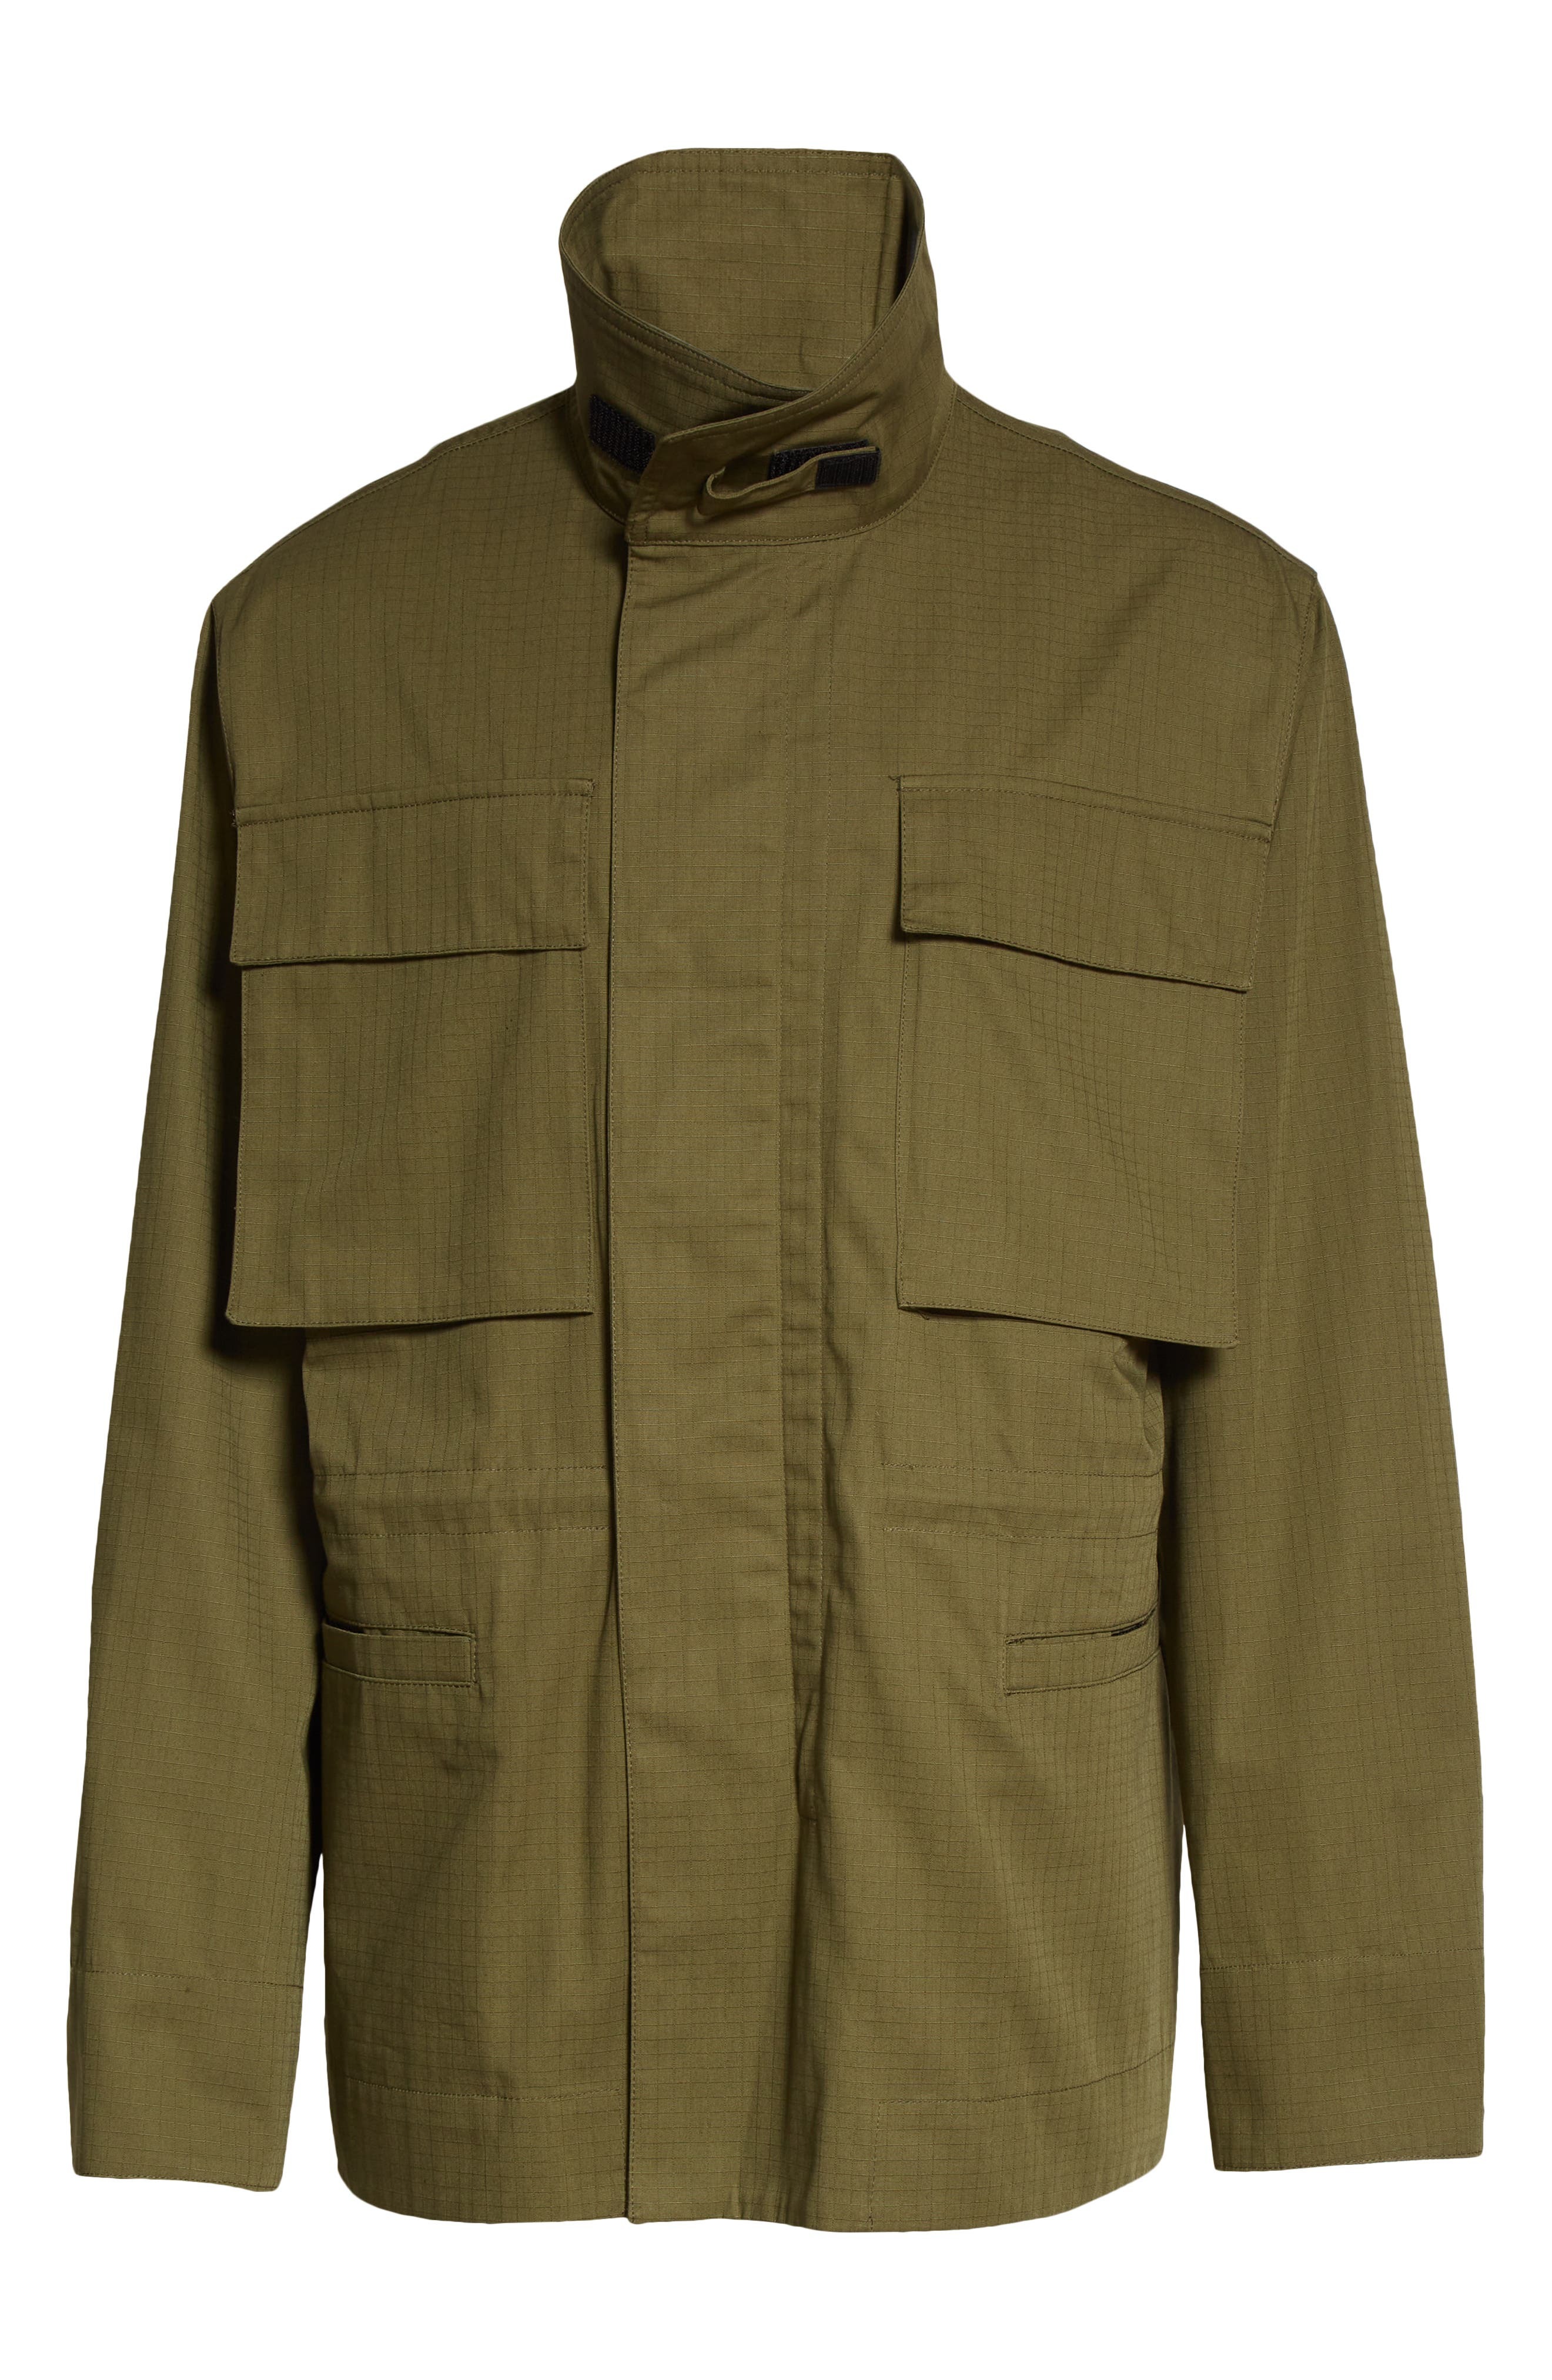 Off-White Arrows Cotton Field Jacket, $1,385 | Nordstrom | Lookastic